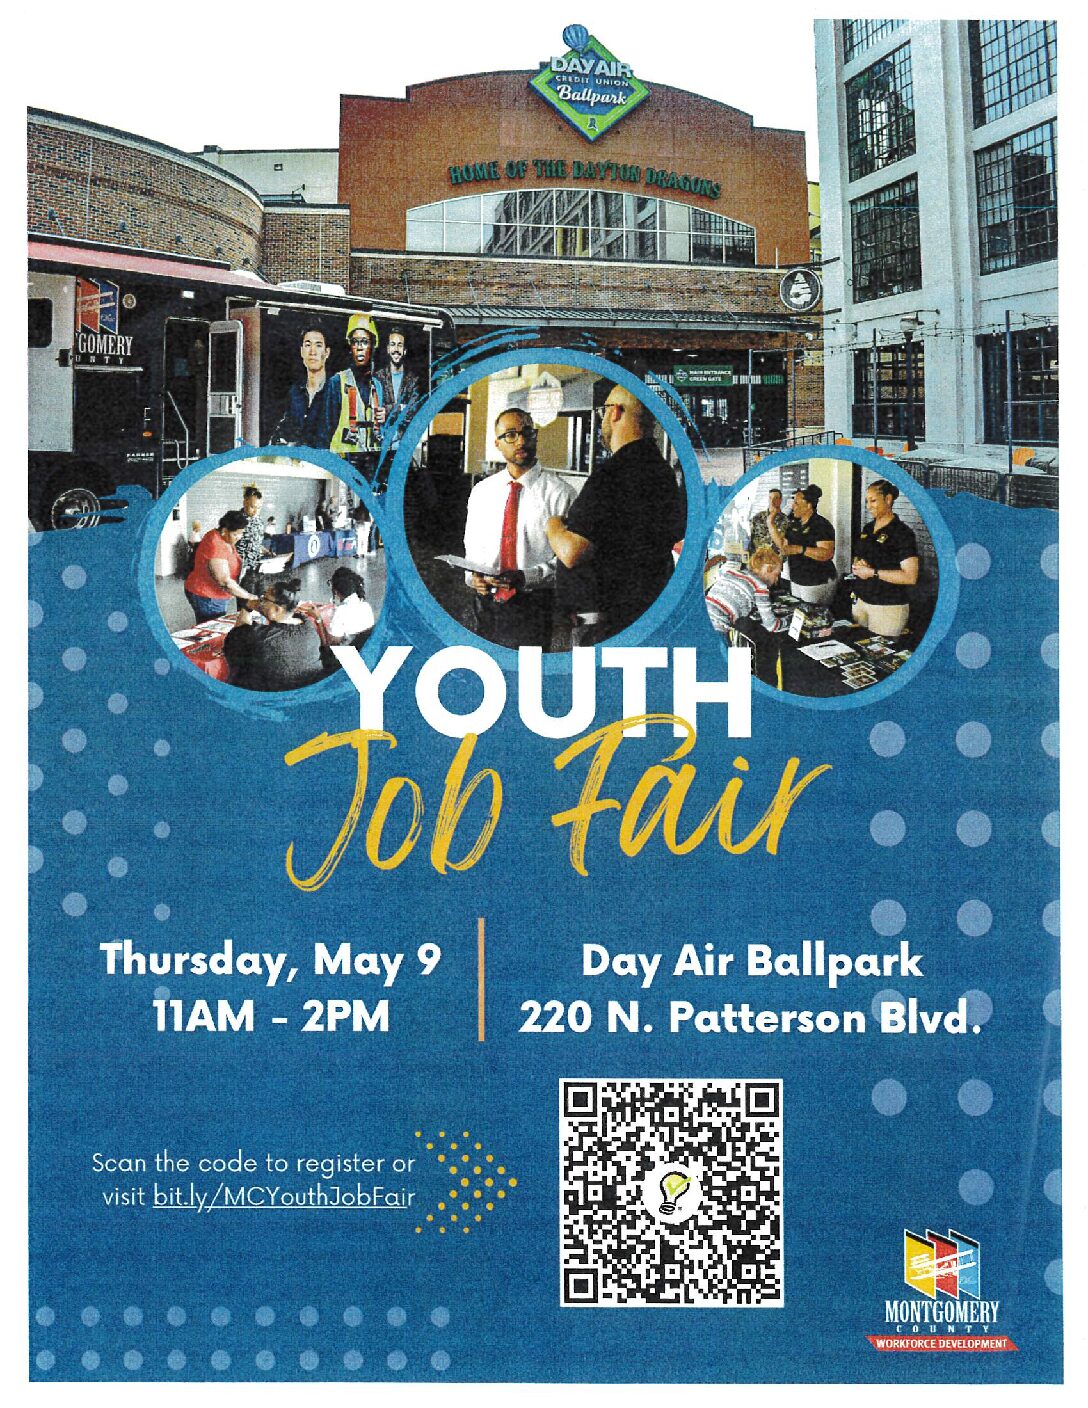 Montgomery County Youth Job Fair